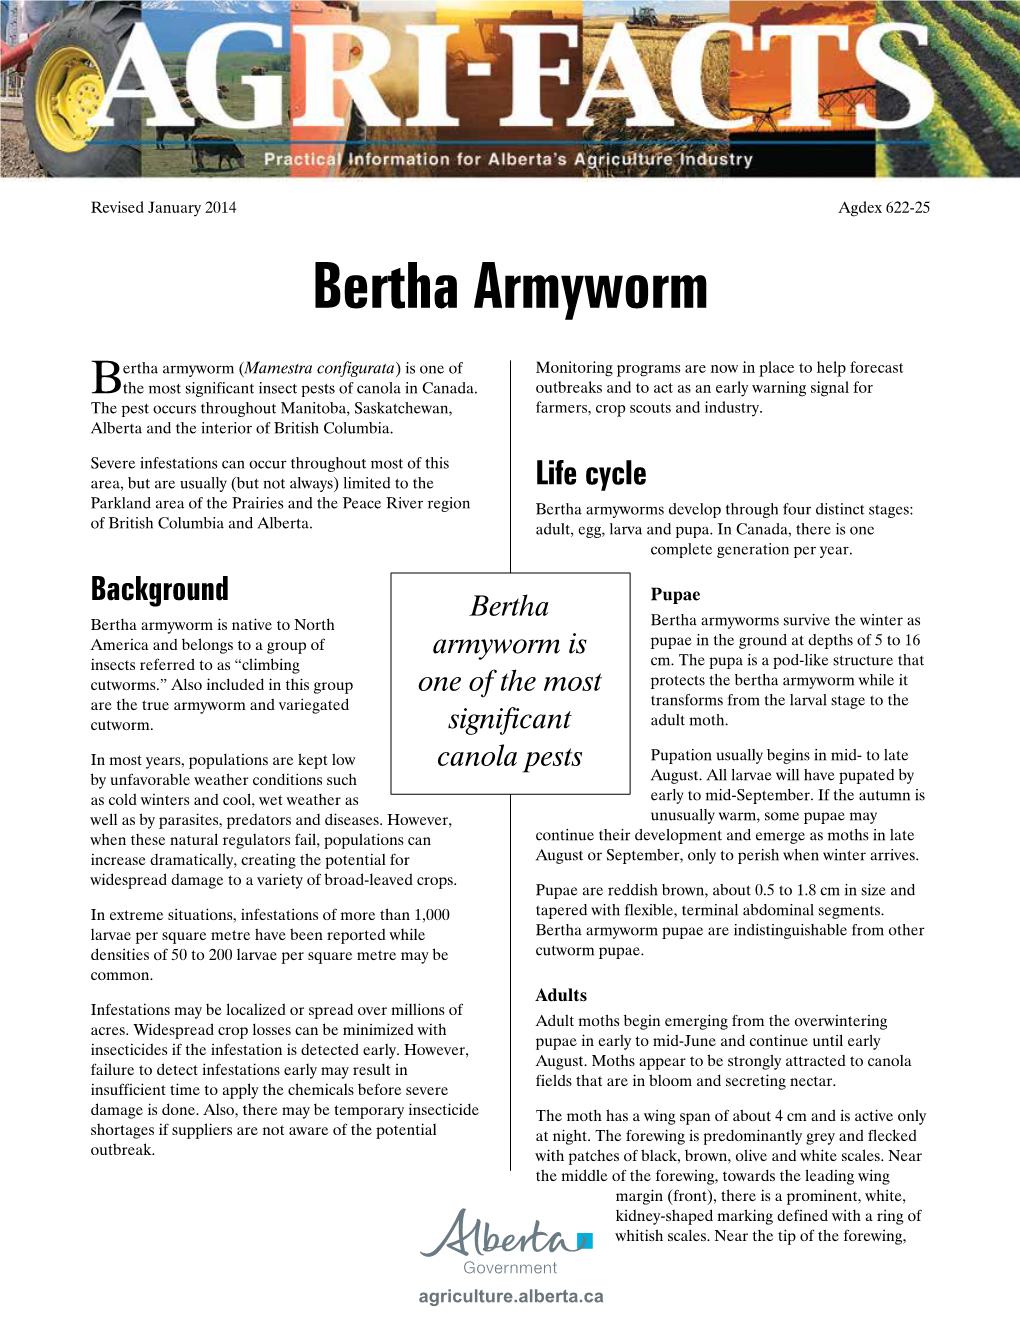 Bertha Armyworm